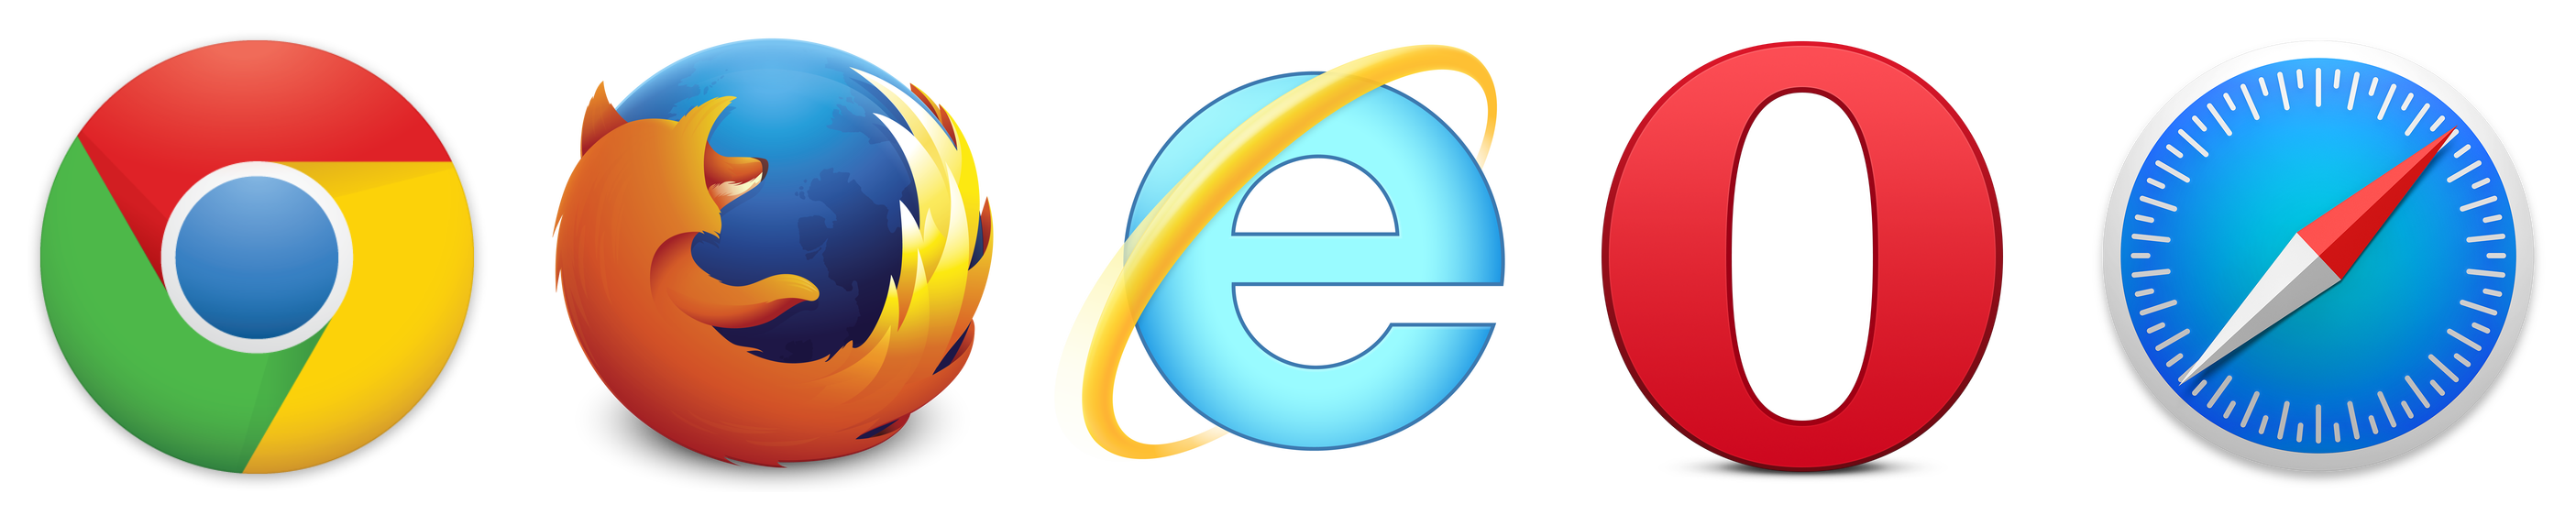 Main desktop browsers logos